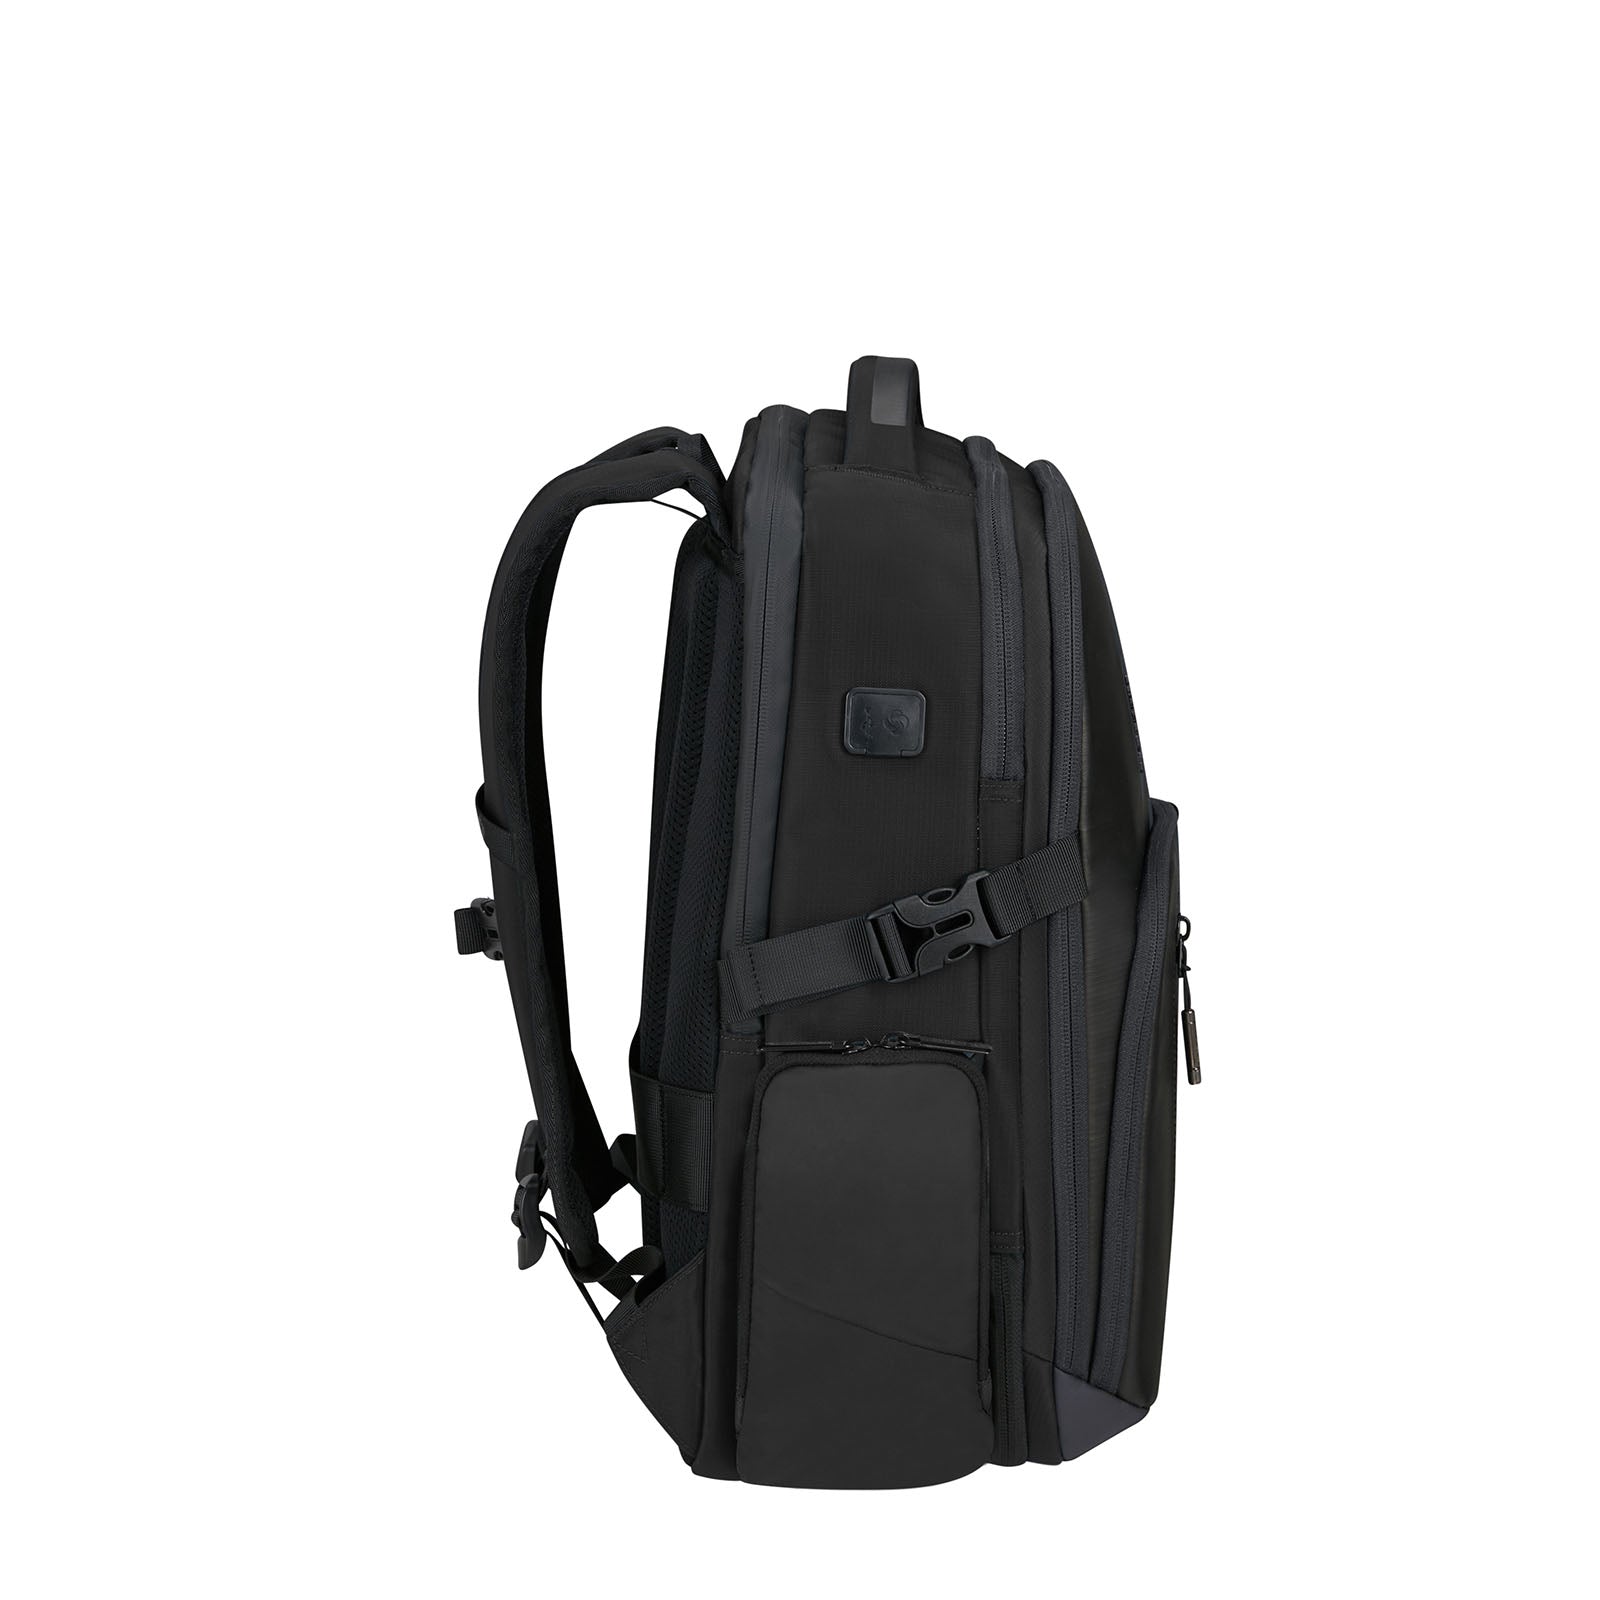 Samsonite-Biz2go-15-Inch-Laptop-Backpack-Black-Side-LH